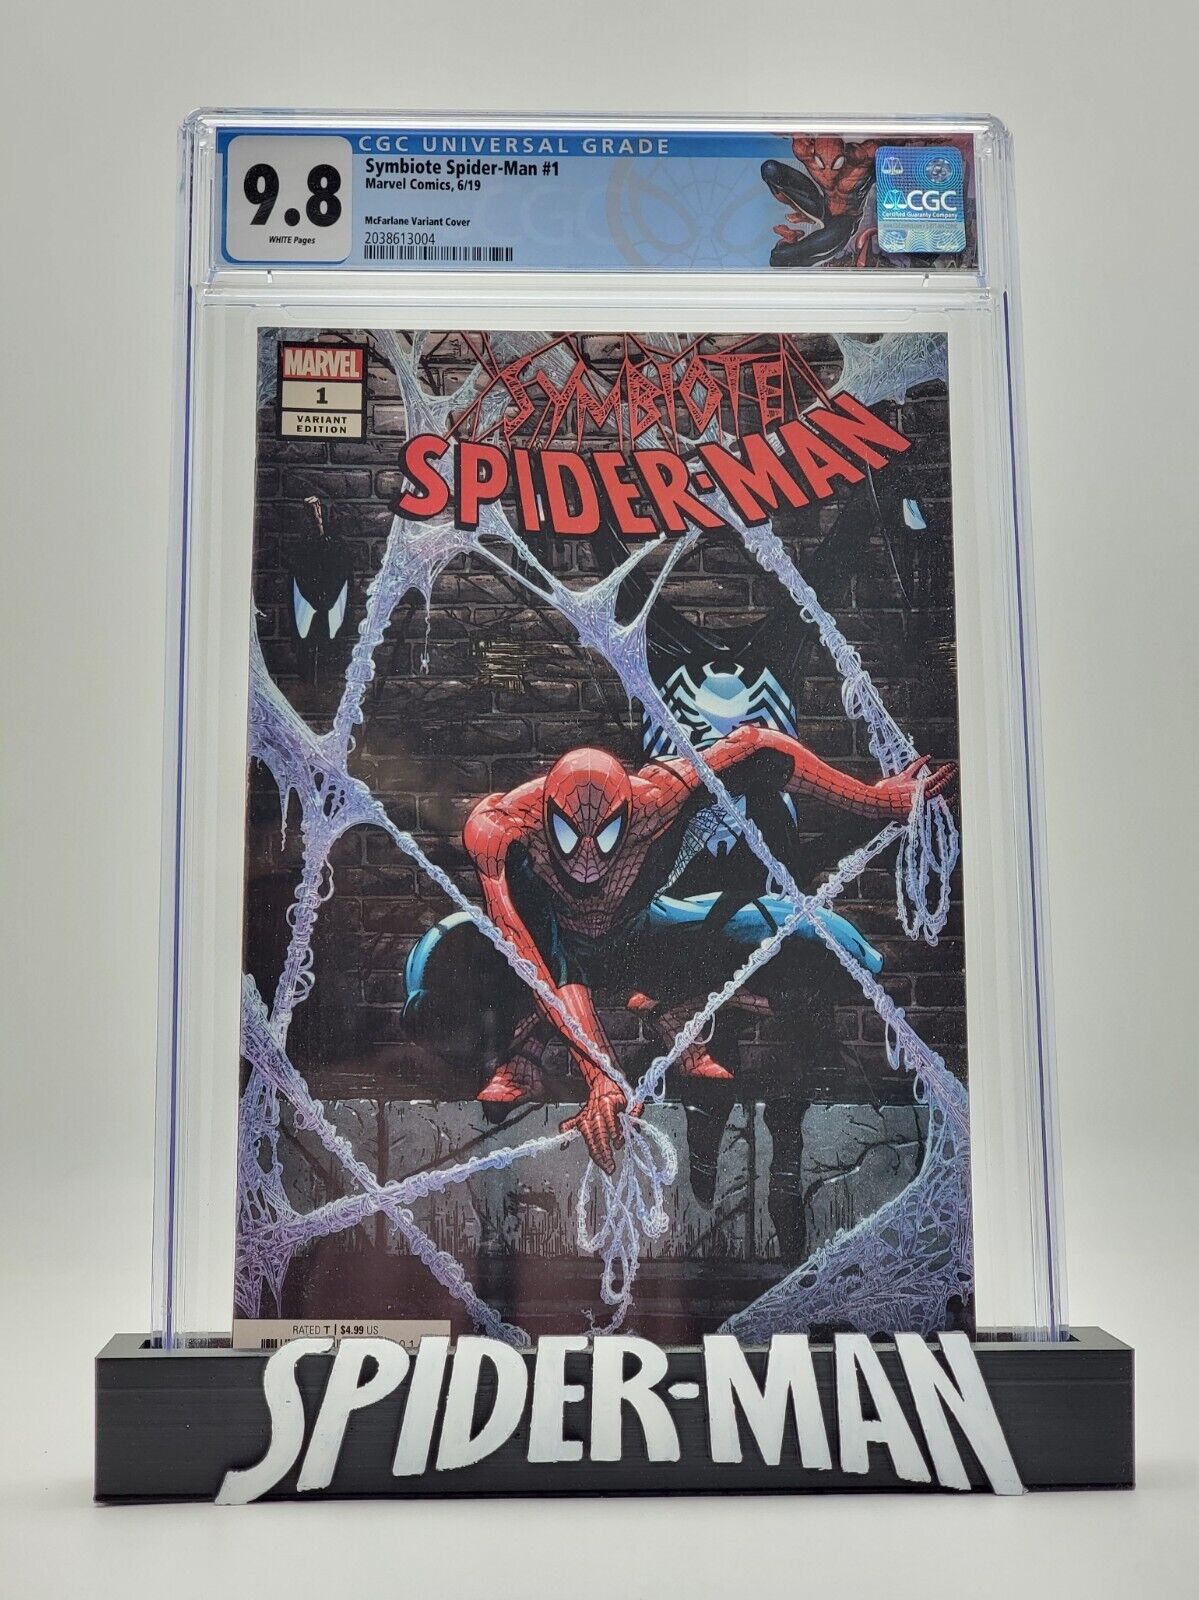 Symbiote Spider-Man #1 Comic 2019 CGC 9.8 McFarlane Cover Variant Hidden Gem